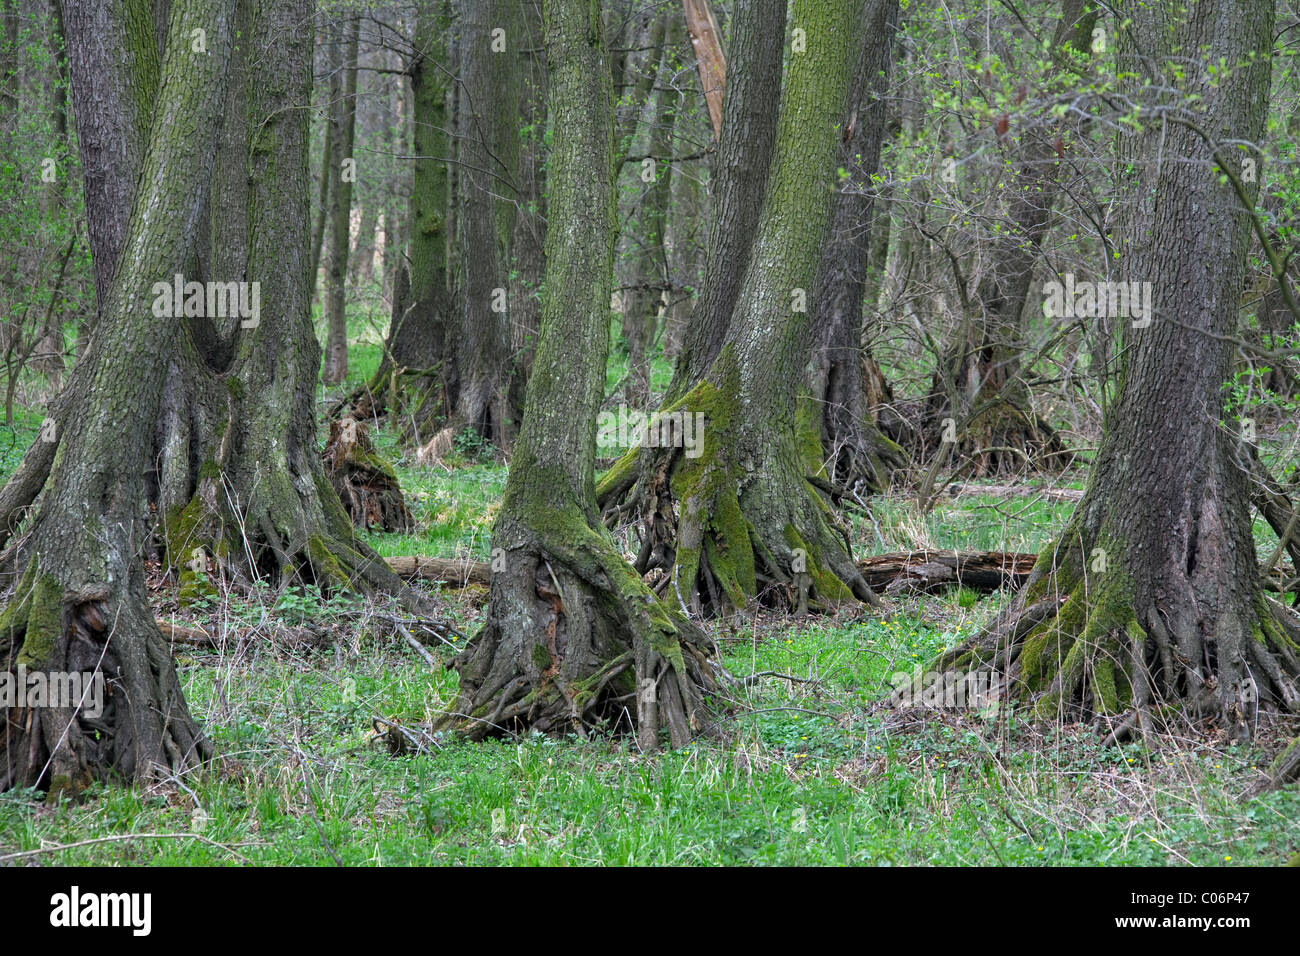 European Alder, Black Alder (Alnus glutinosa) trees in marshland, Fertoe-Hansag National Park, Hungary Stock Photo